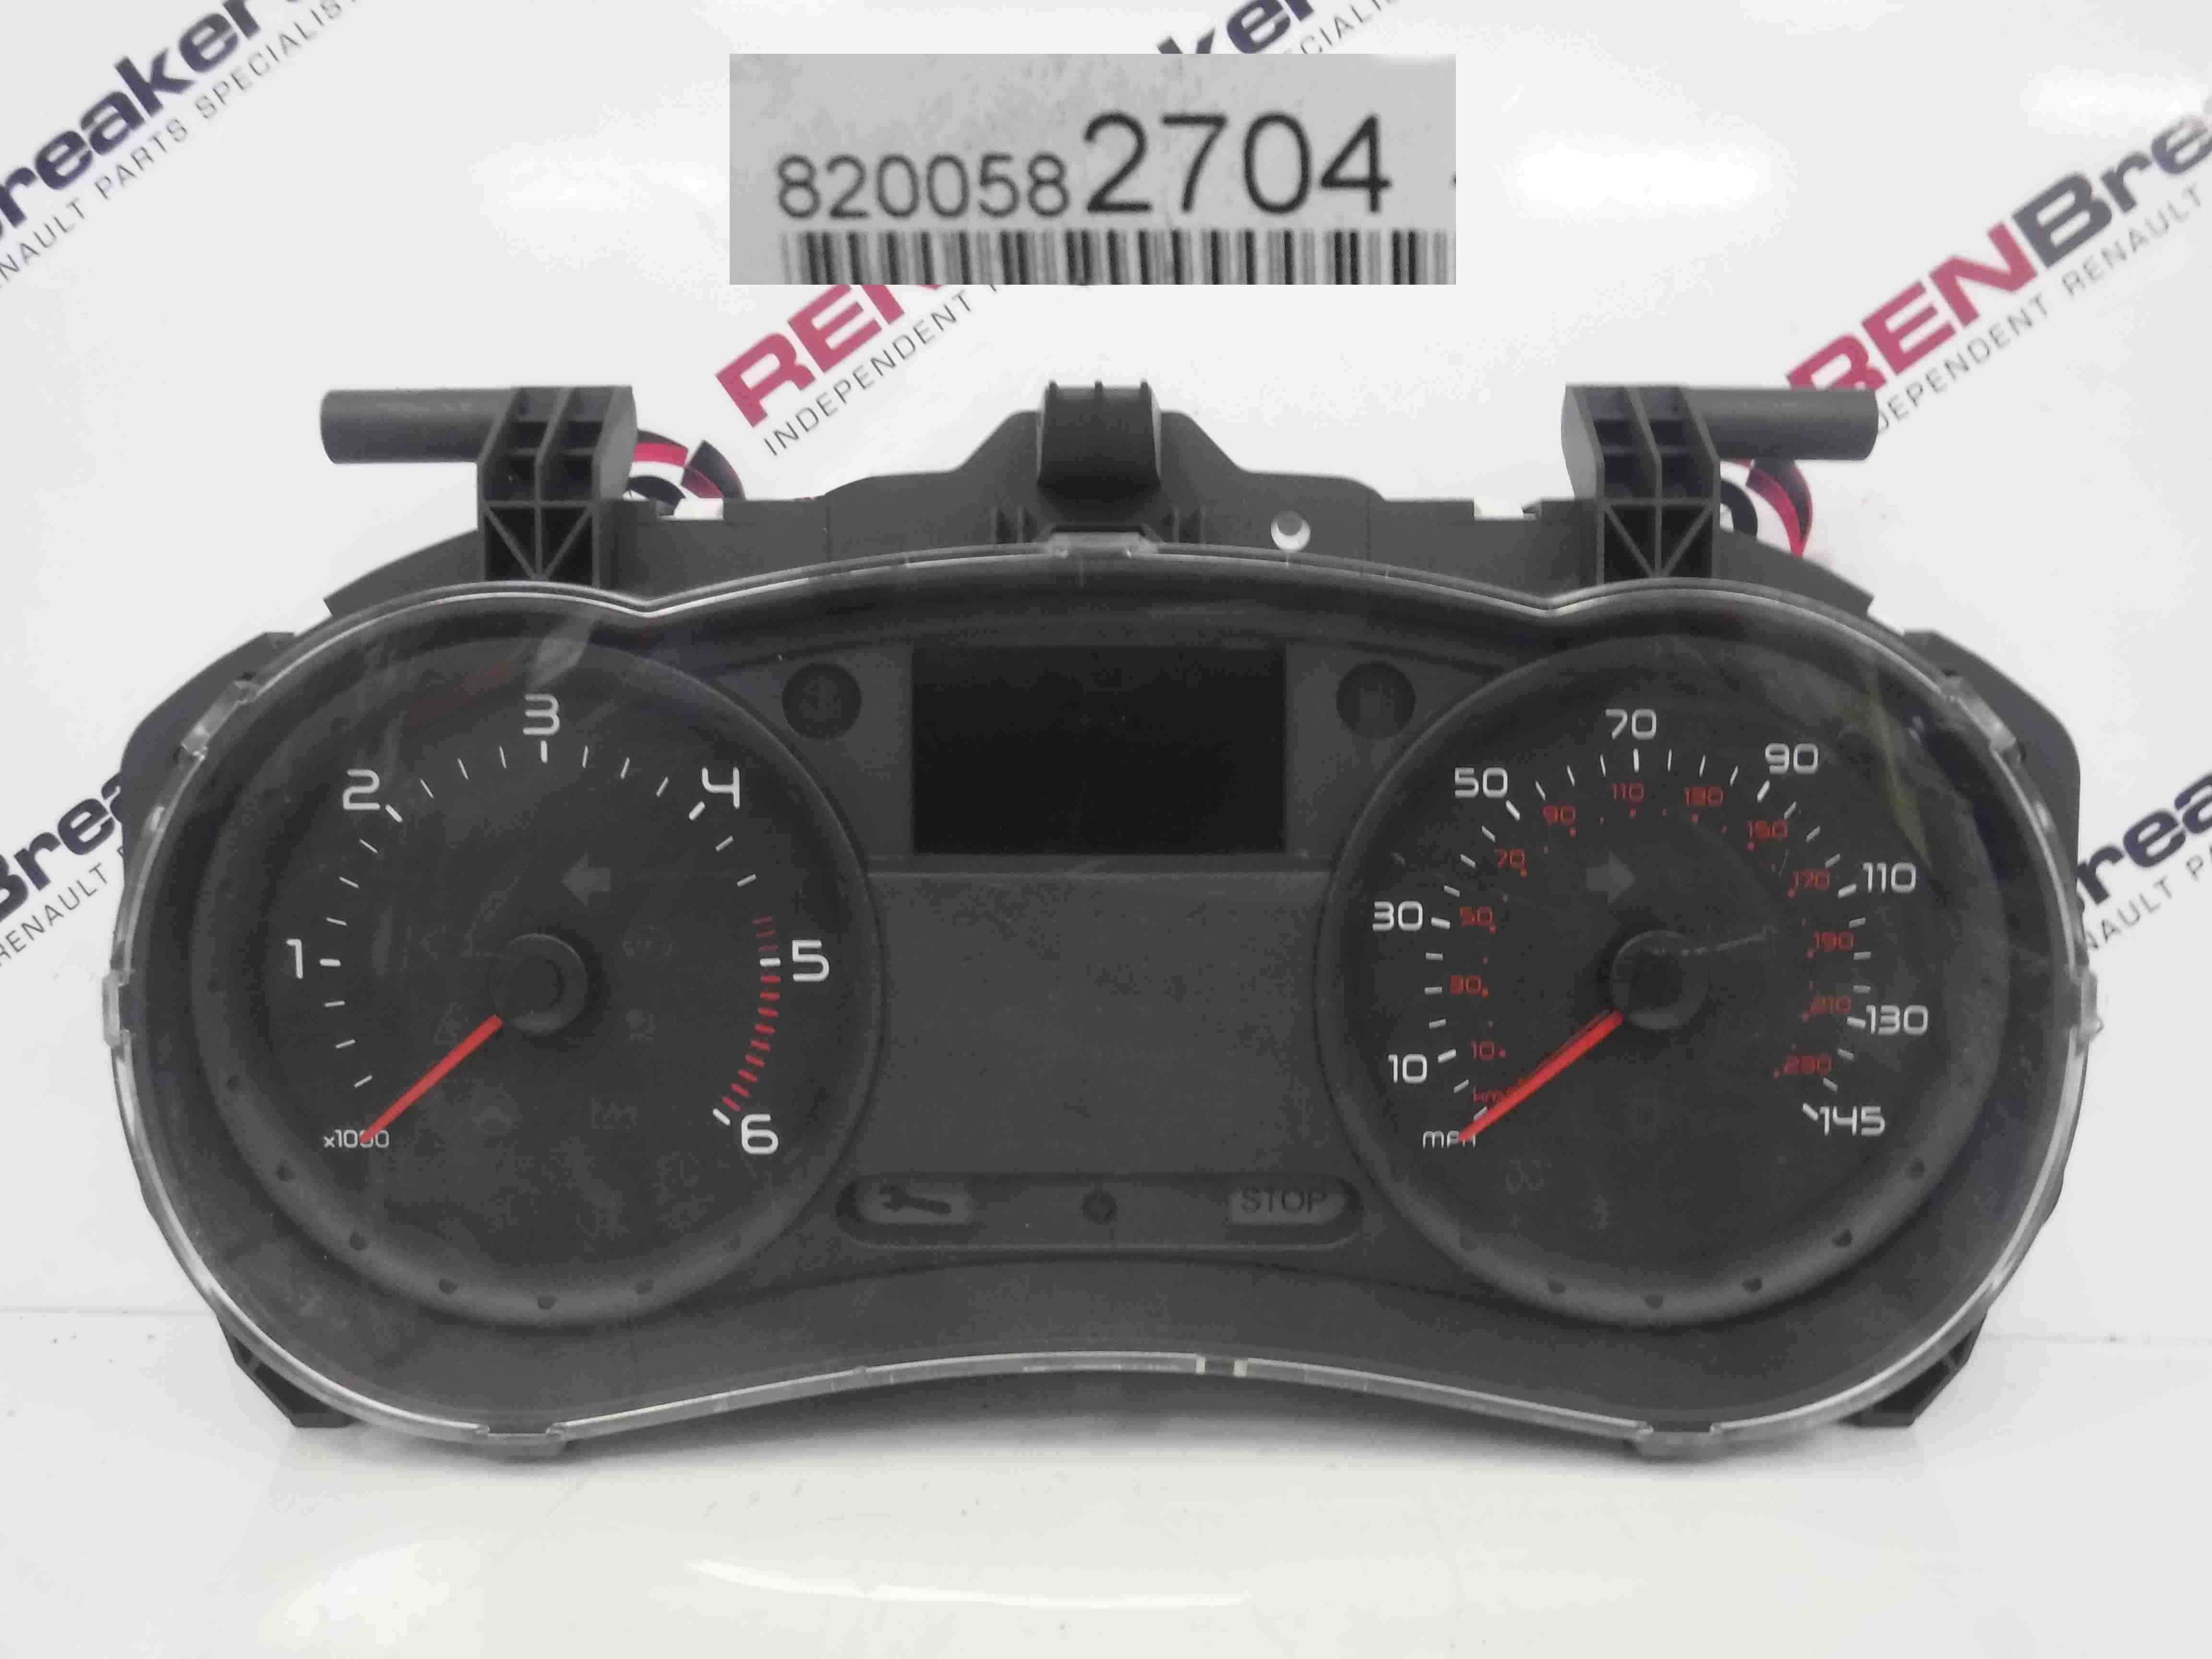 Renault Clio MK3 2005-2012 Instrument Panel Dials Clocks 59K 8200582704